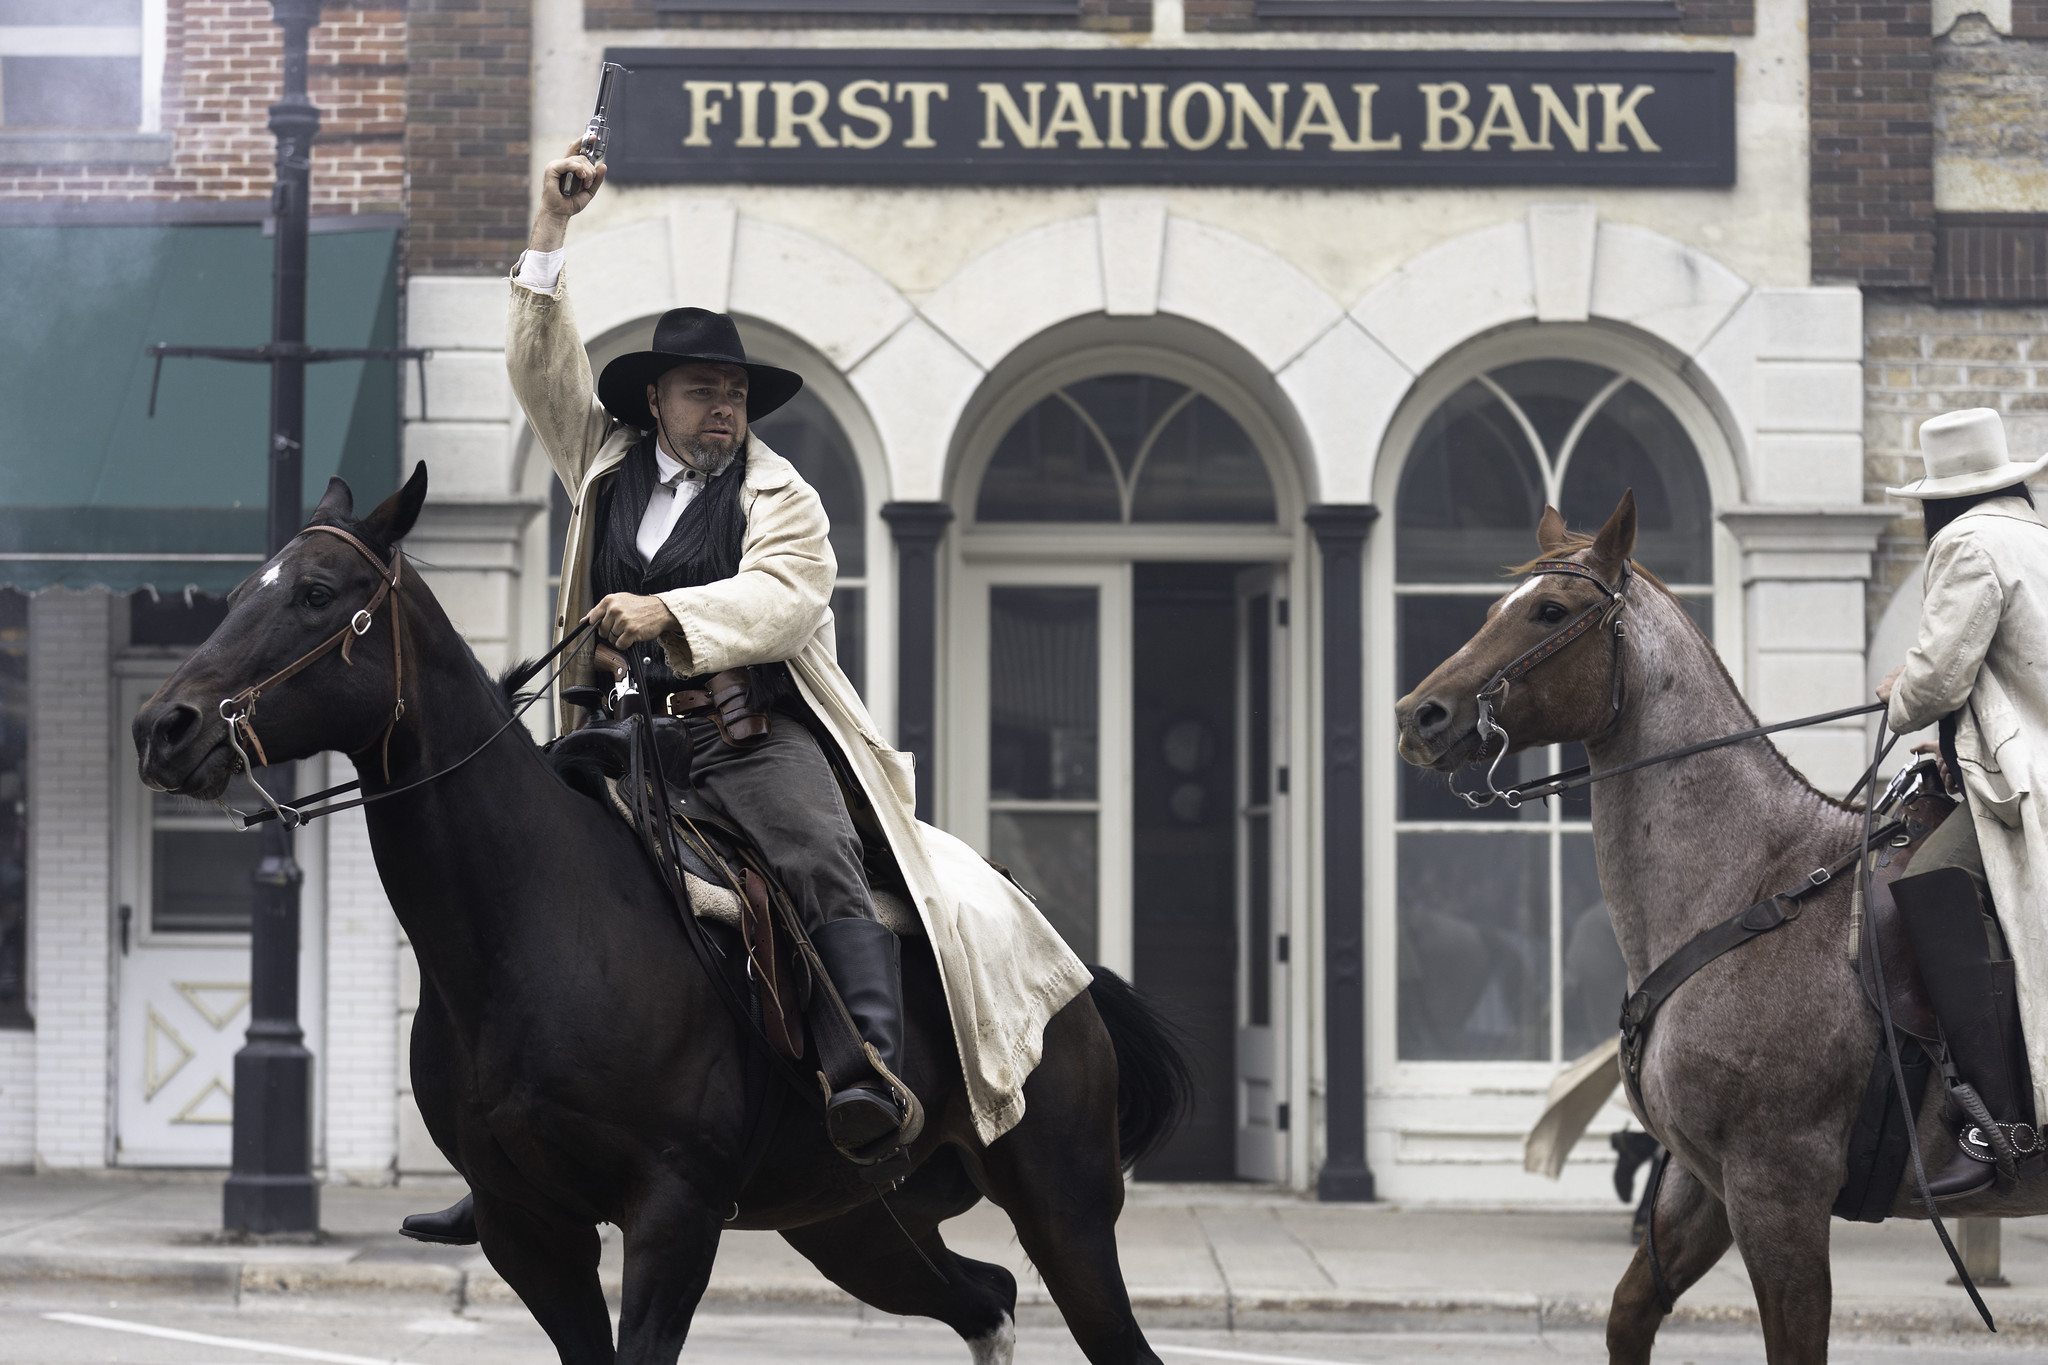 A man on horseback raises his fist outside Northfield's First National Bank